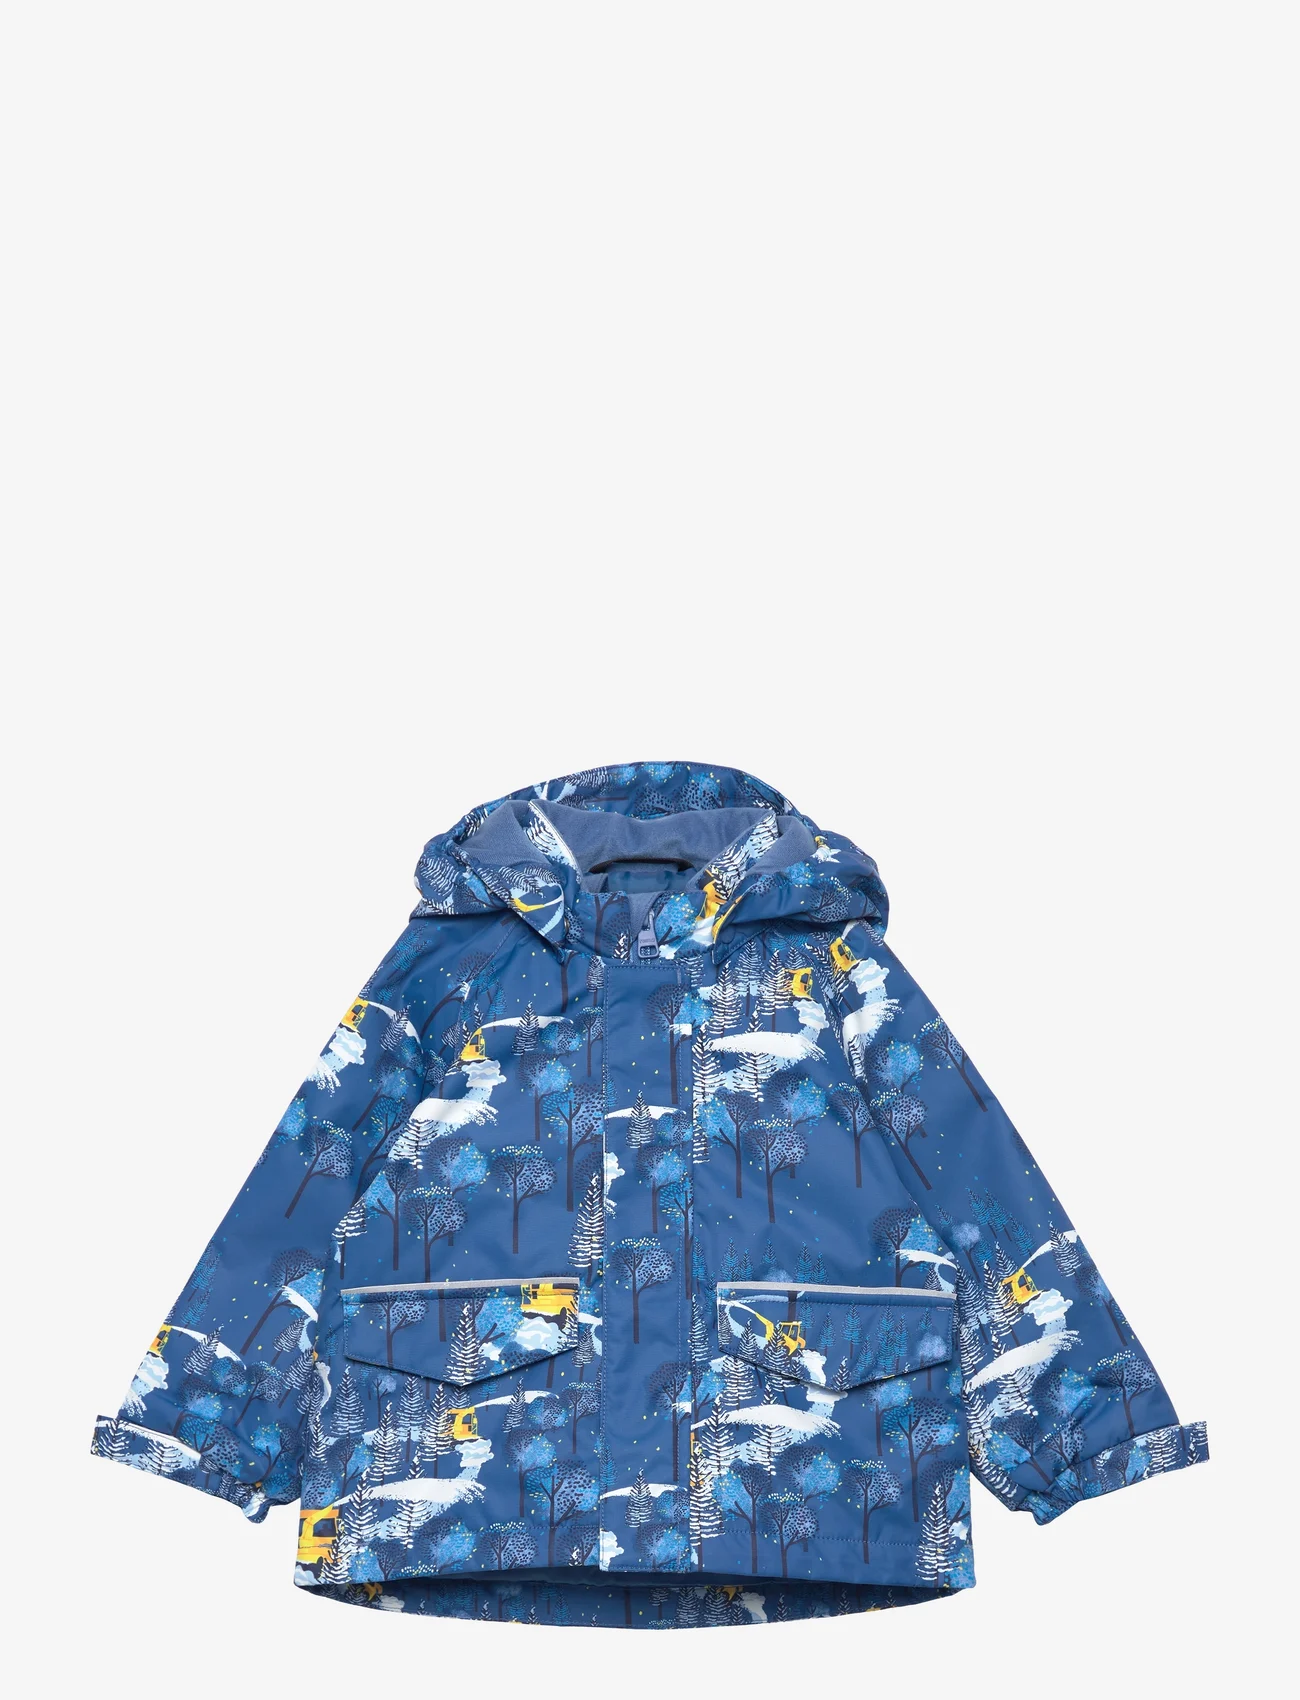 Reima - Toddlers' winter jacket Kustavi - skaljackor - soft navy - 0